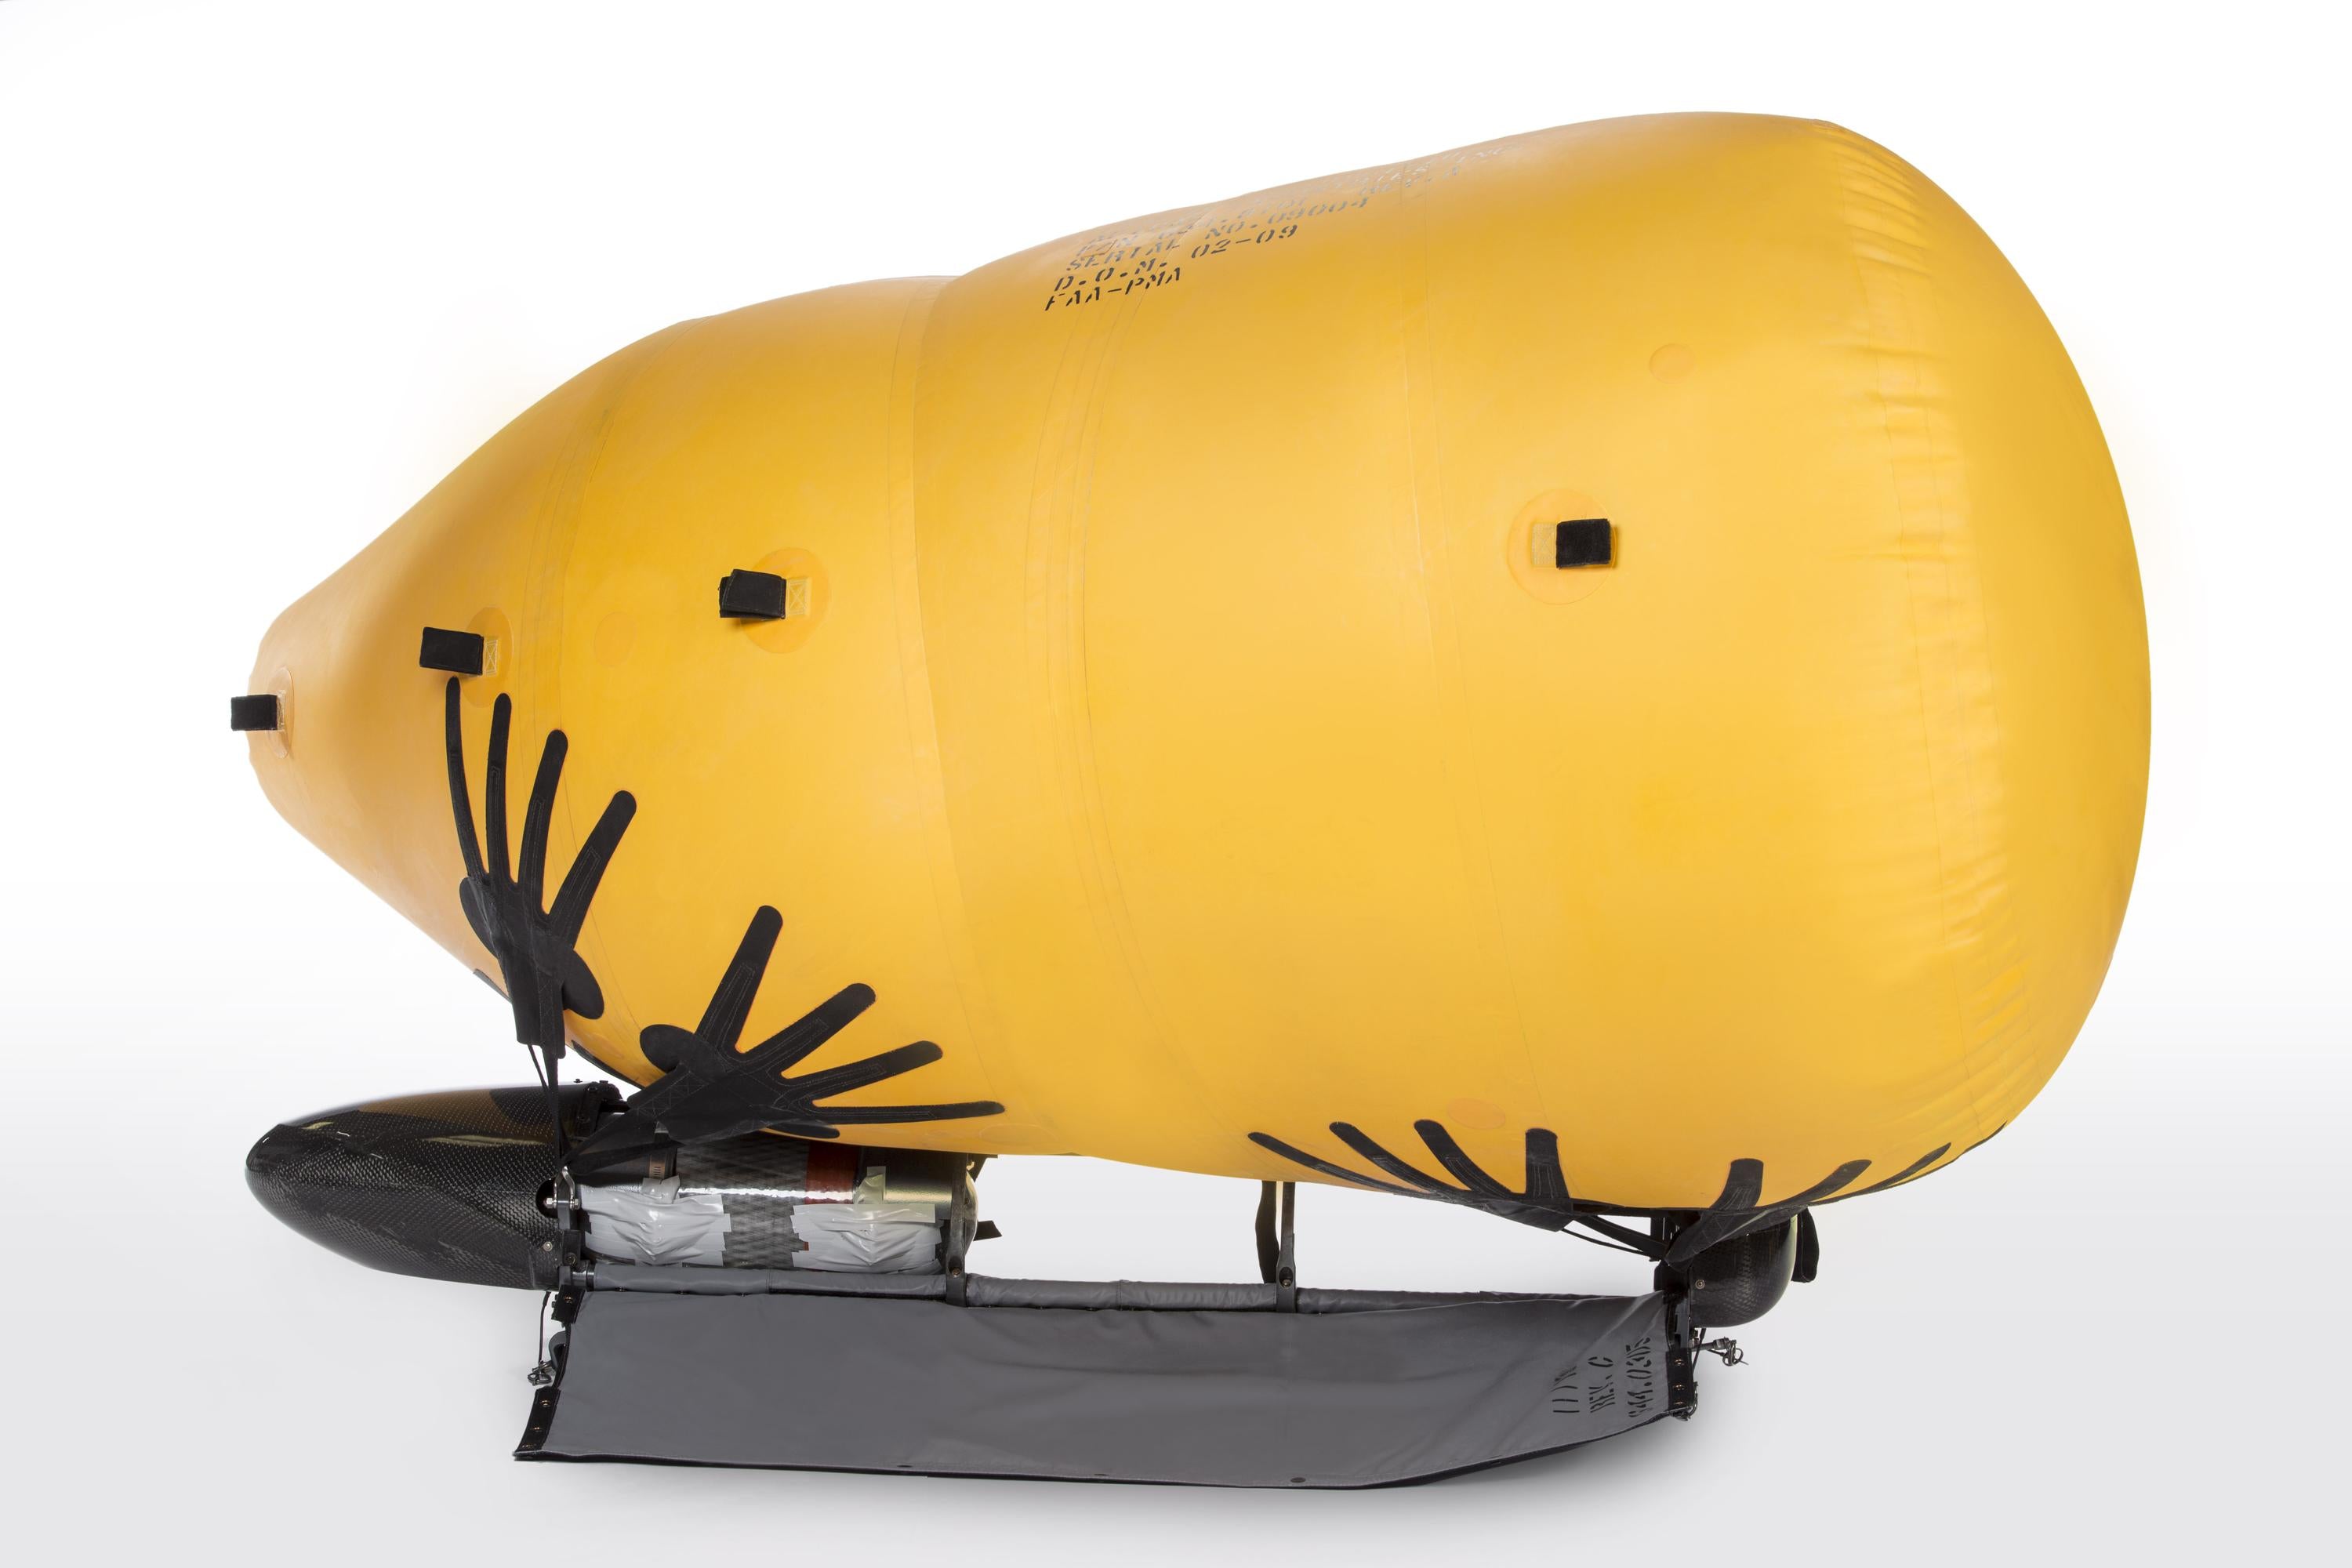 AW109 emergency float system